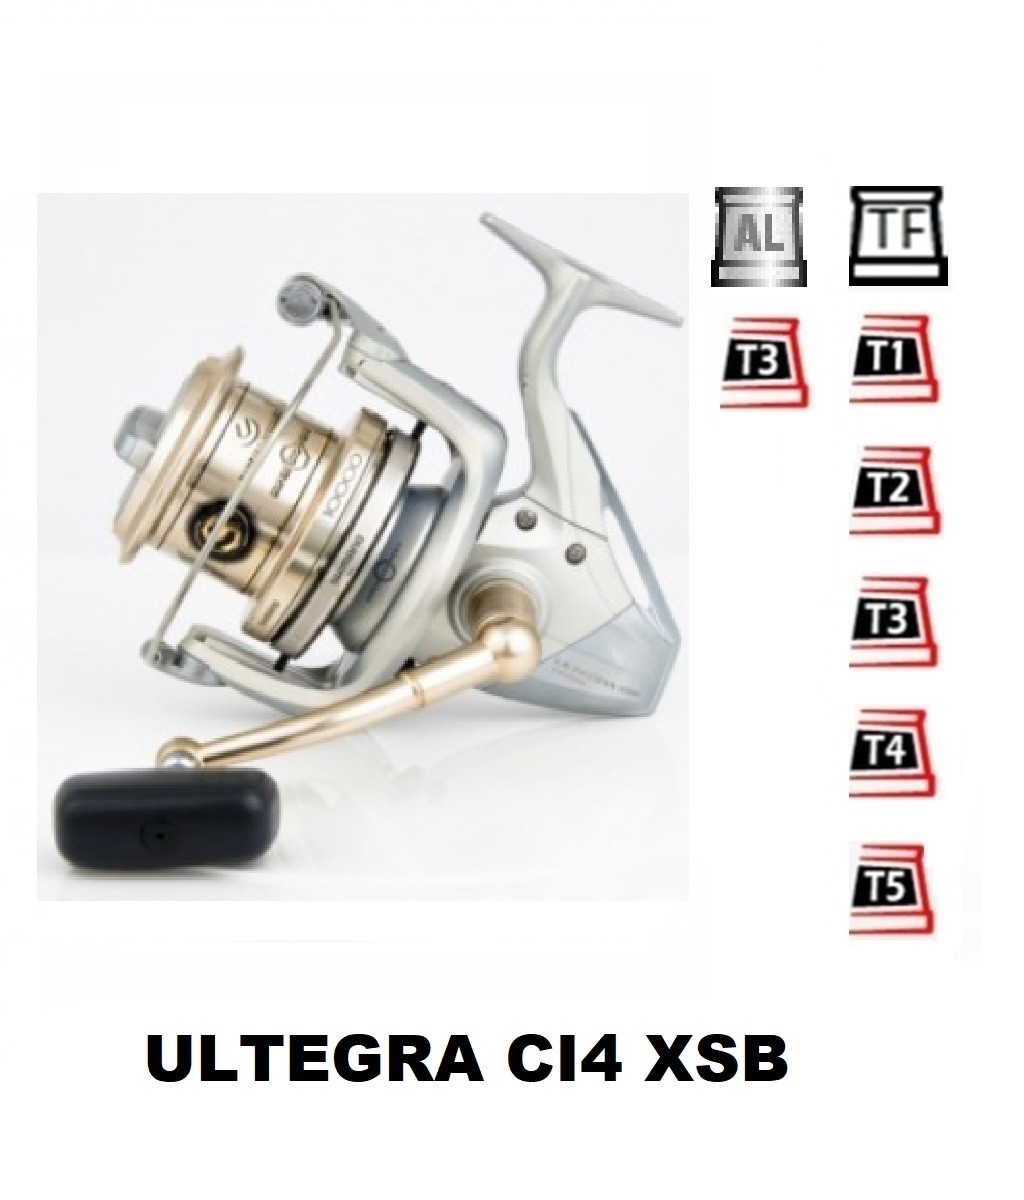 Ersatzpule kompatible mit Ultegra Ci4 Xsb